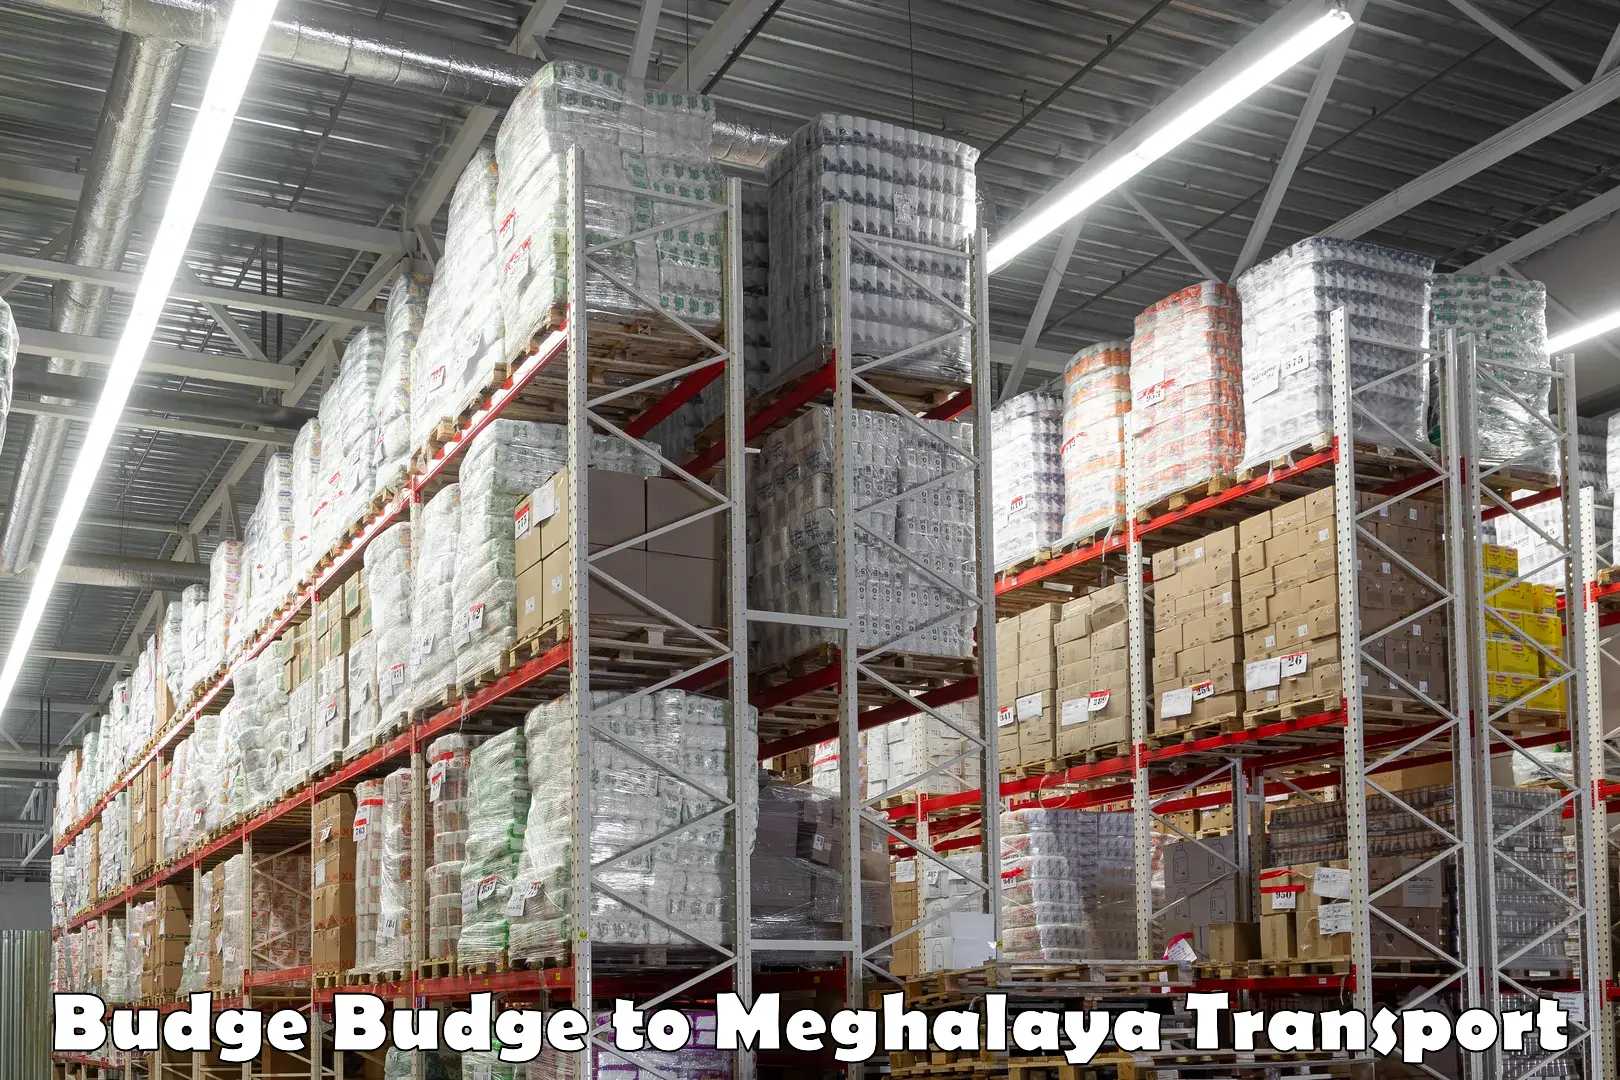 Transport in sharing Budge Budge to Meghalaya